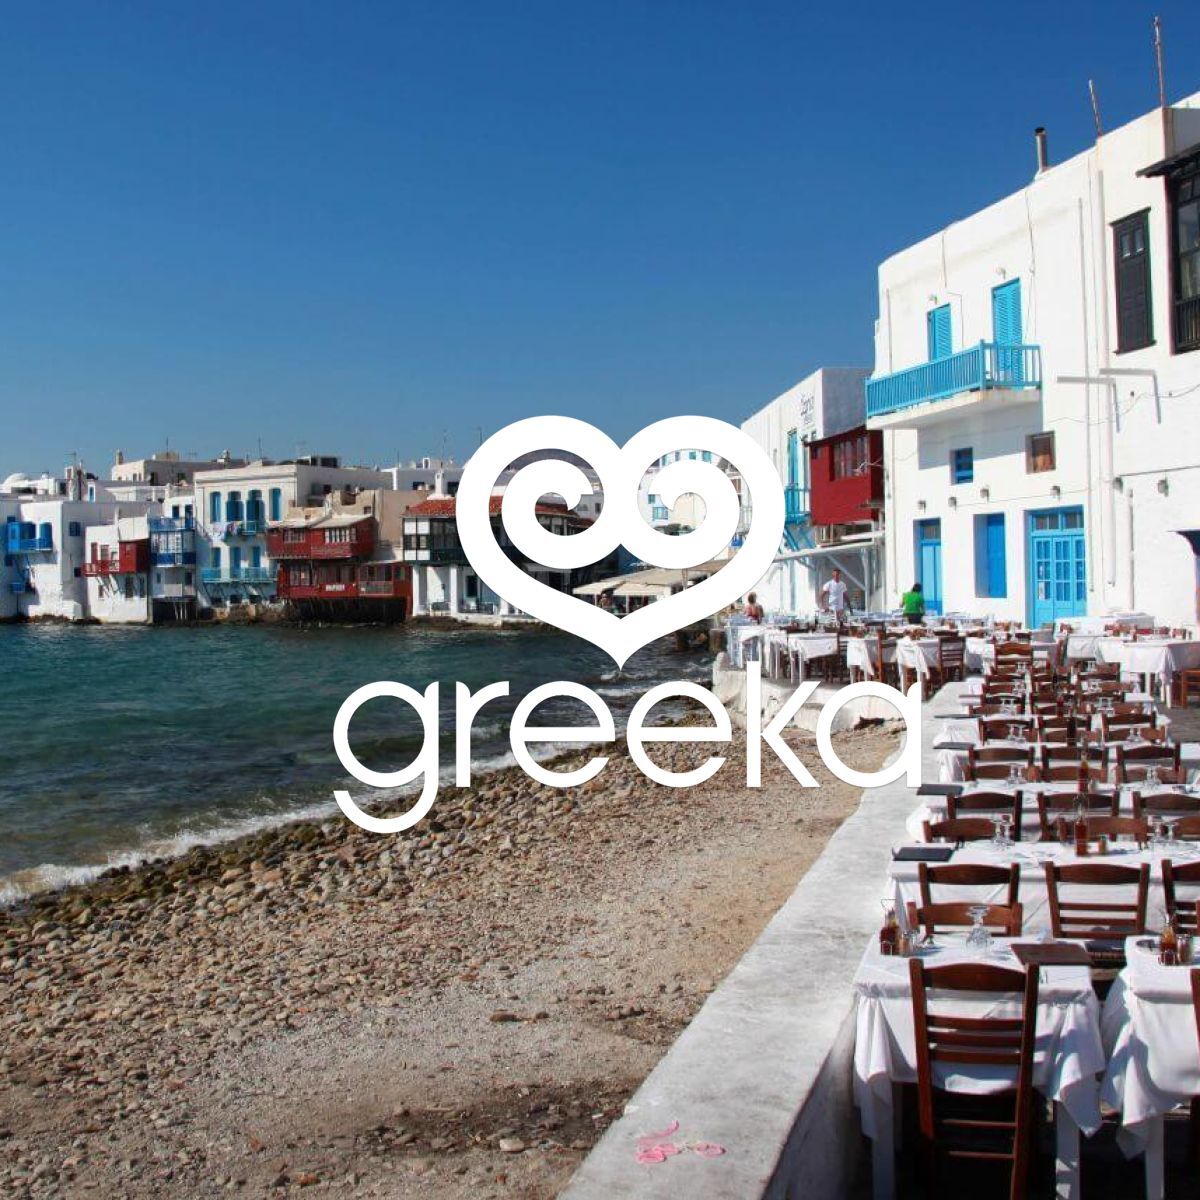 Traditional Greek Outdoor Restaurant With Mediterranean Sea View